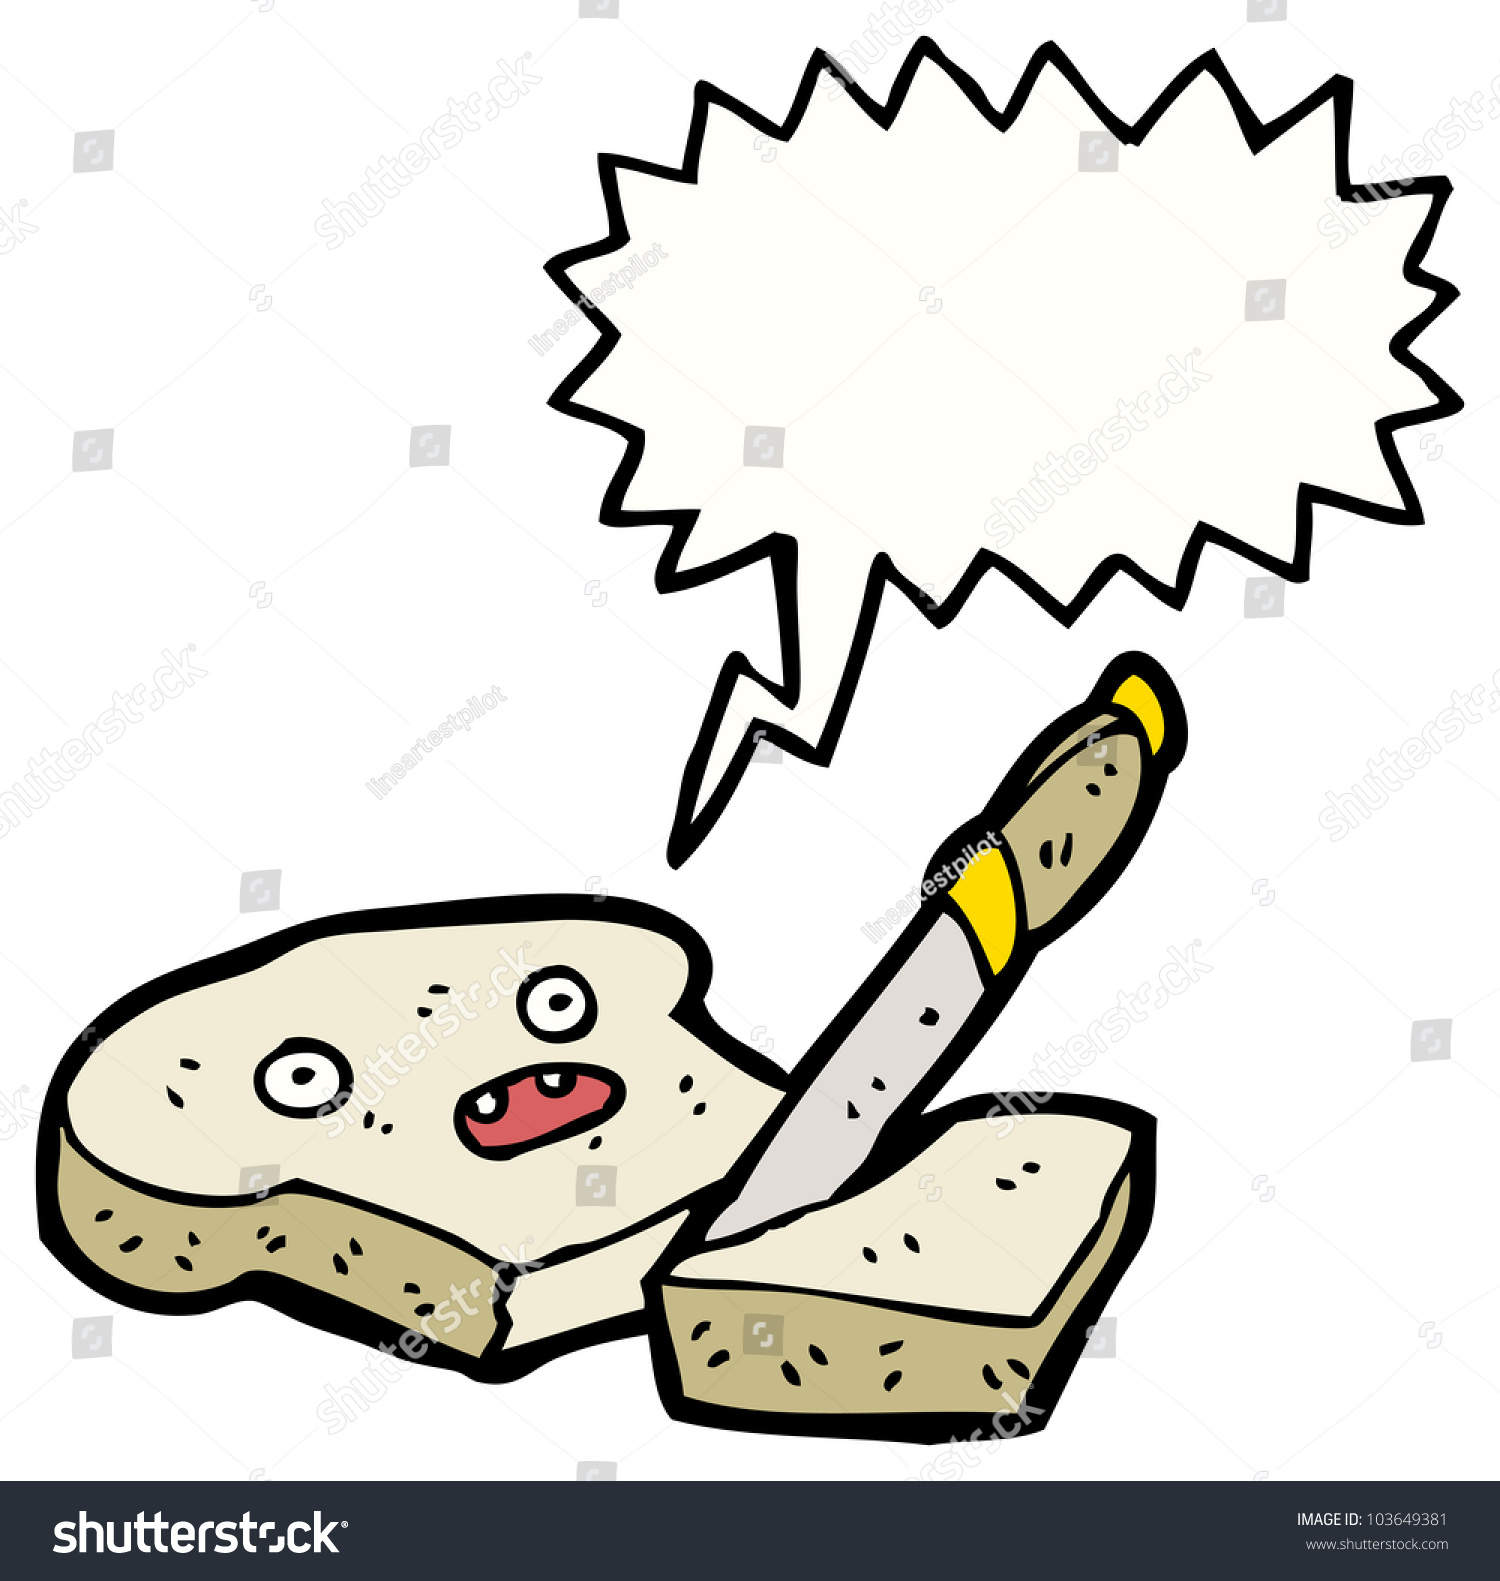 Cartoon Cut Toast Character Stock Photo 103649381 : Shutterstock